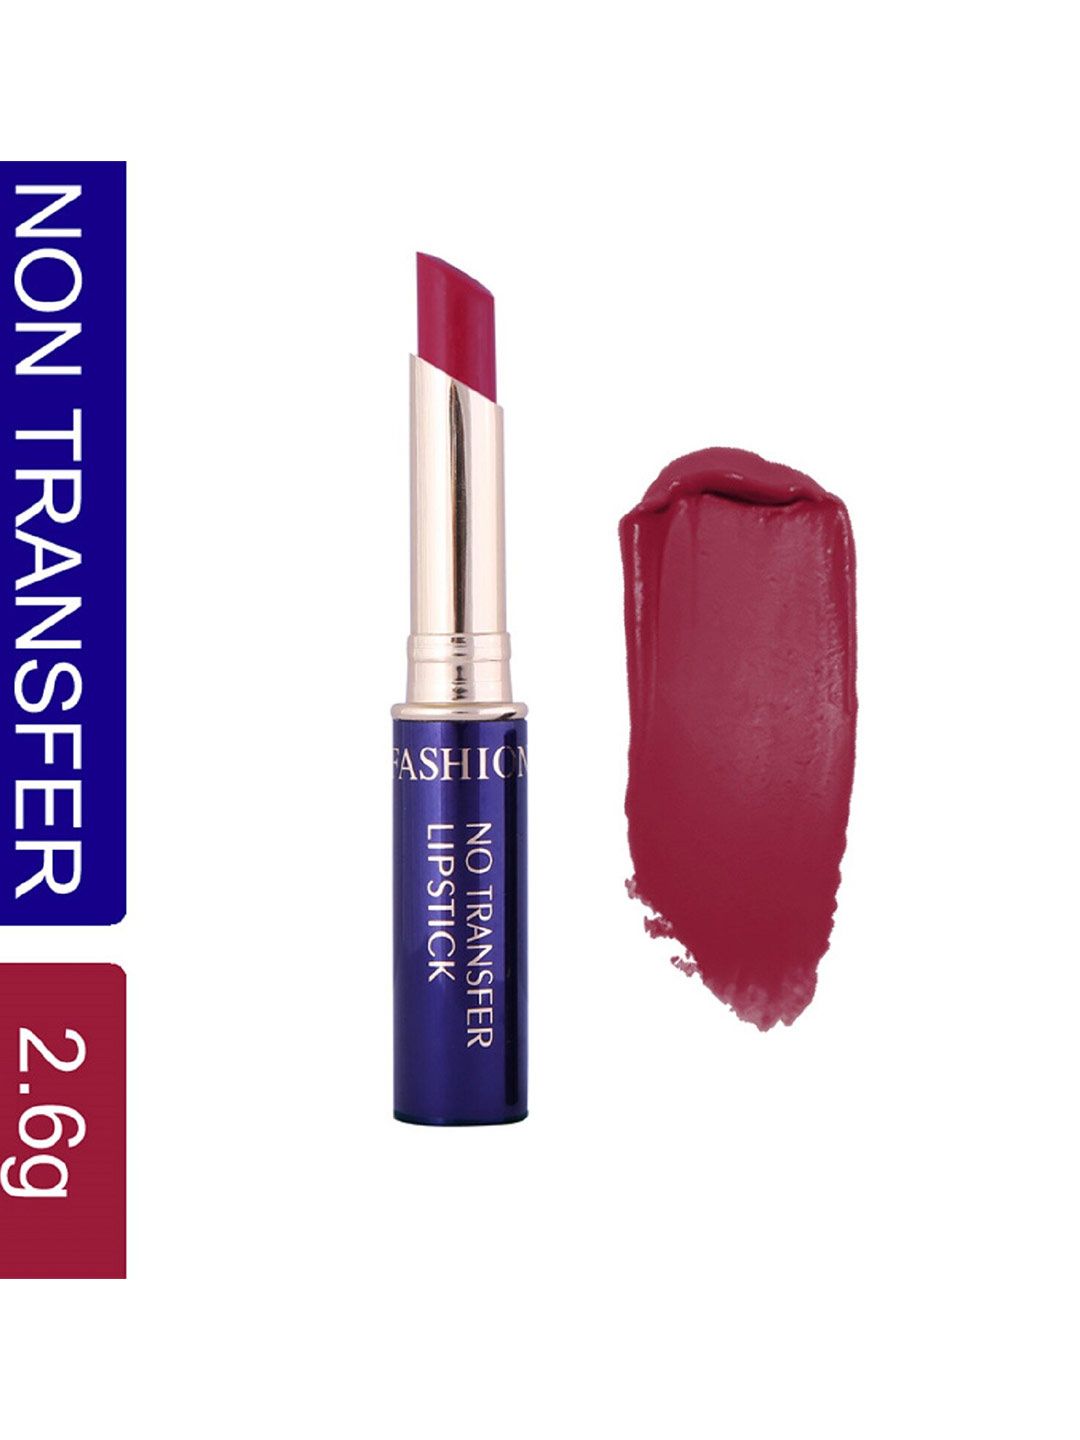 Fashion Colour Non-Transfer Waterproof Matte Lipstick - Cherry Pink 54 Price in India